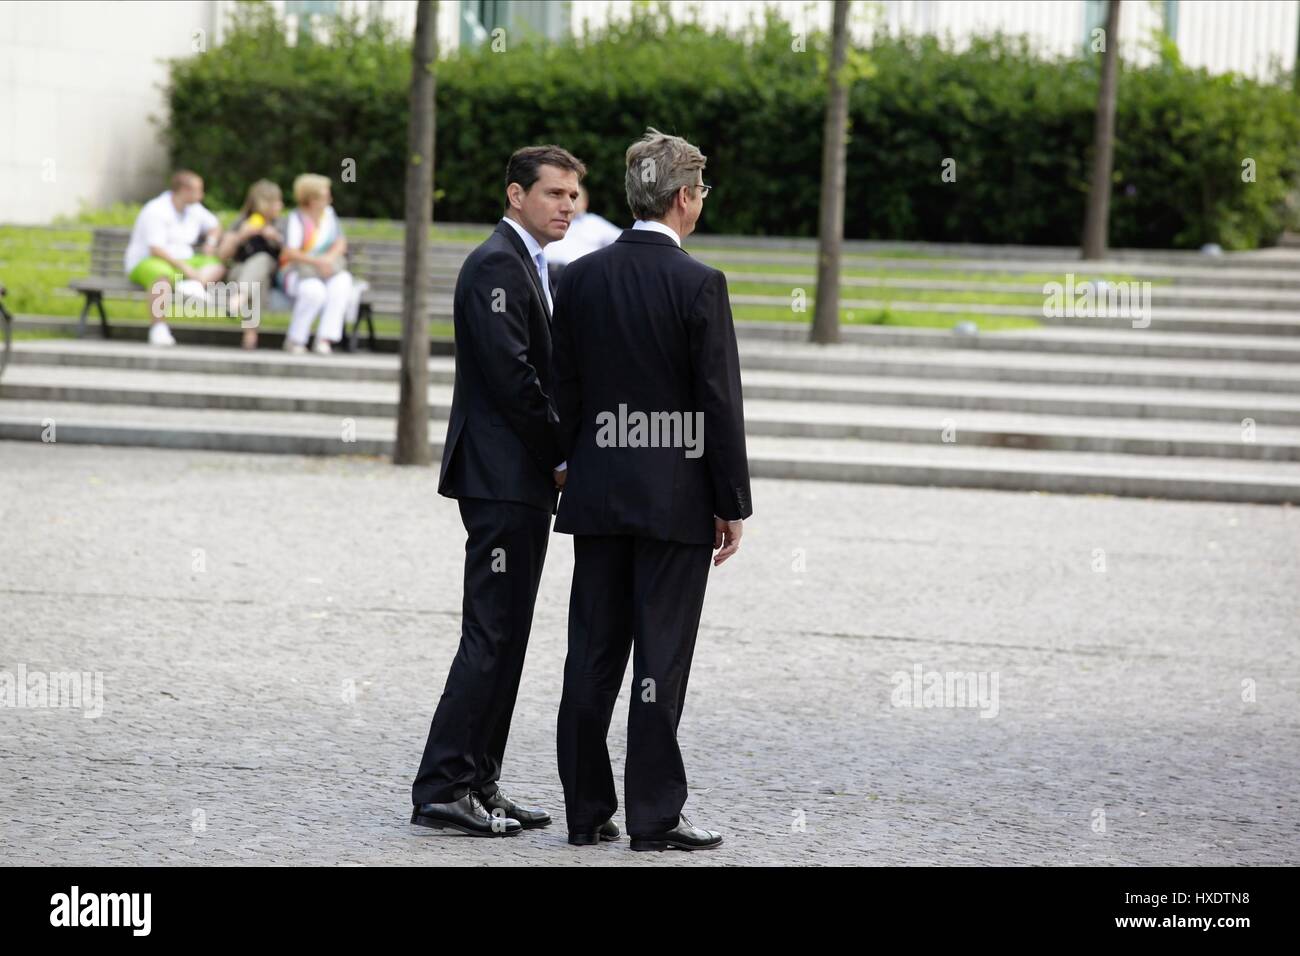 MICHAEL MRONZ & GUIDO WESTERWELLE POLITICIAN WITH HUSBAND 09 July 2012 Stock Photo